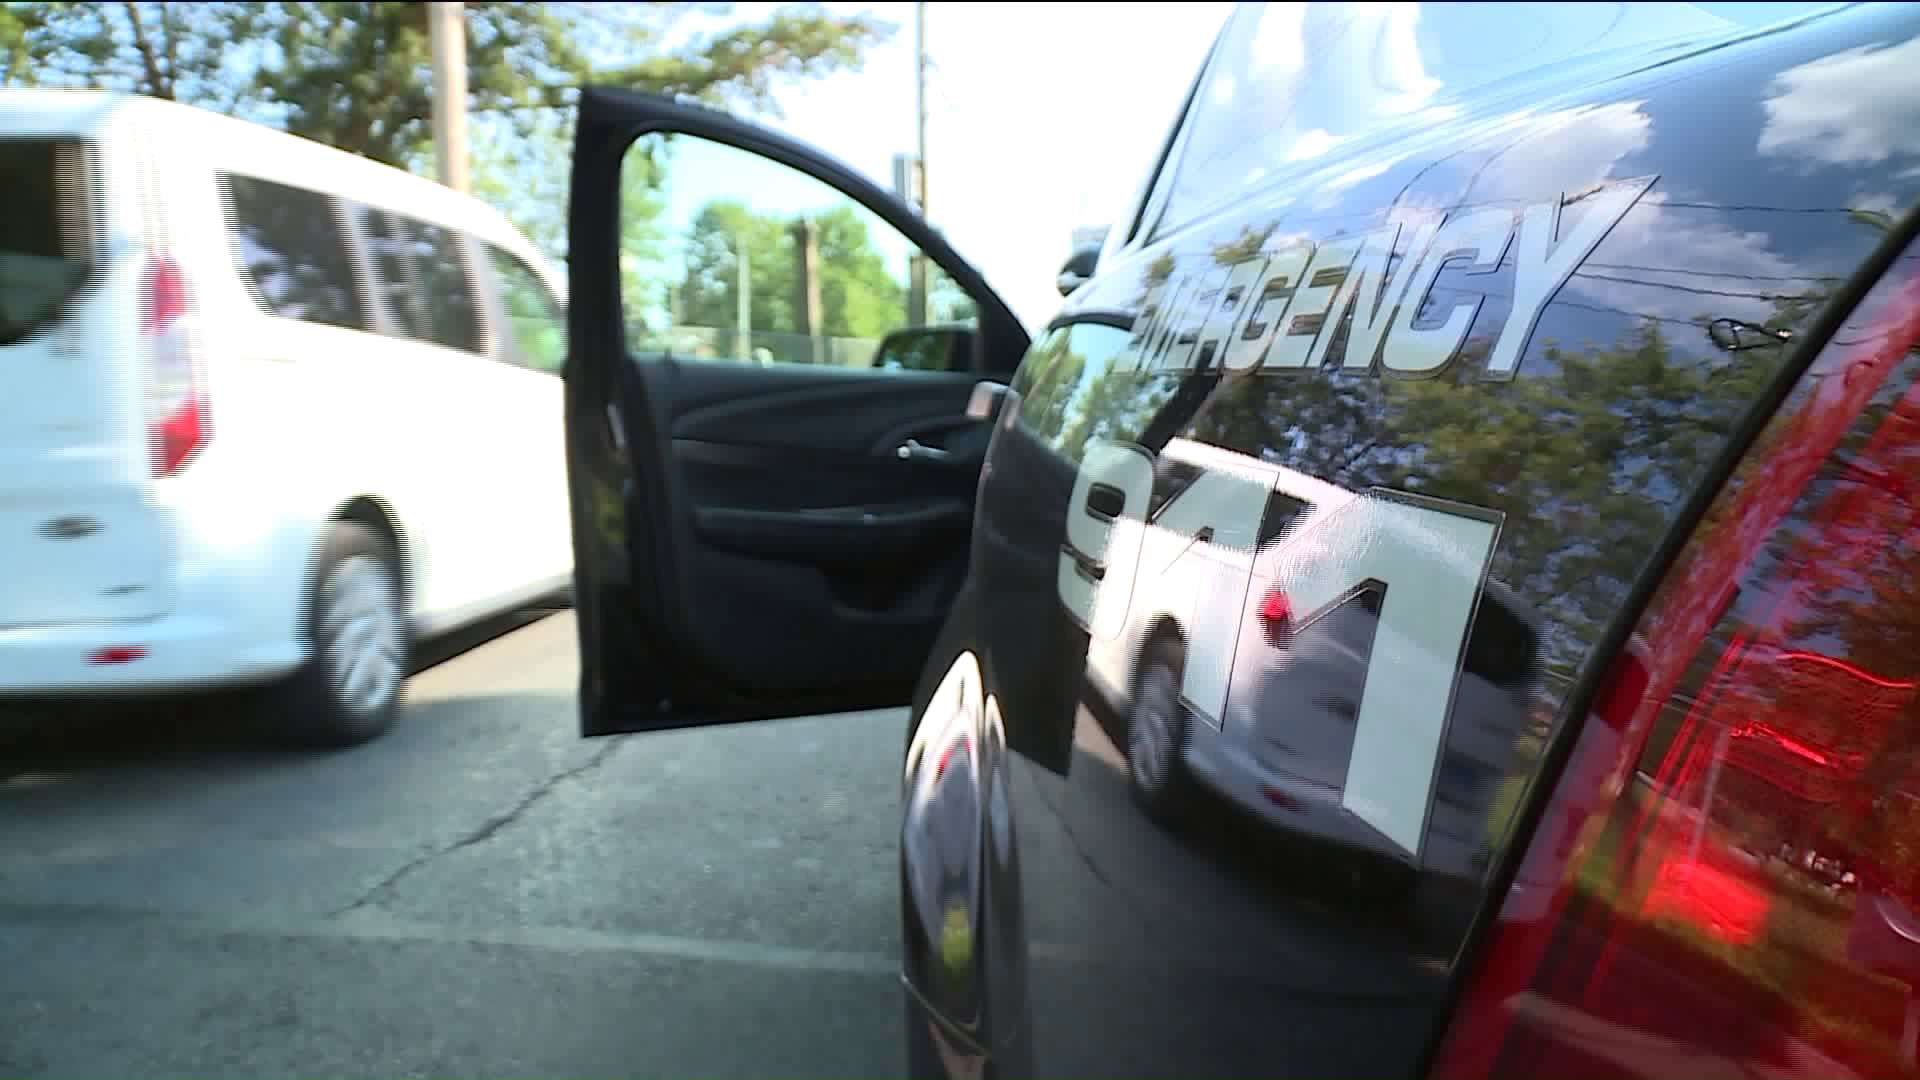 Cracking down on stolen cars in Hartford